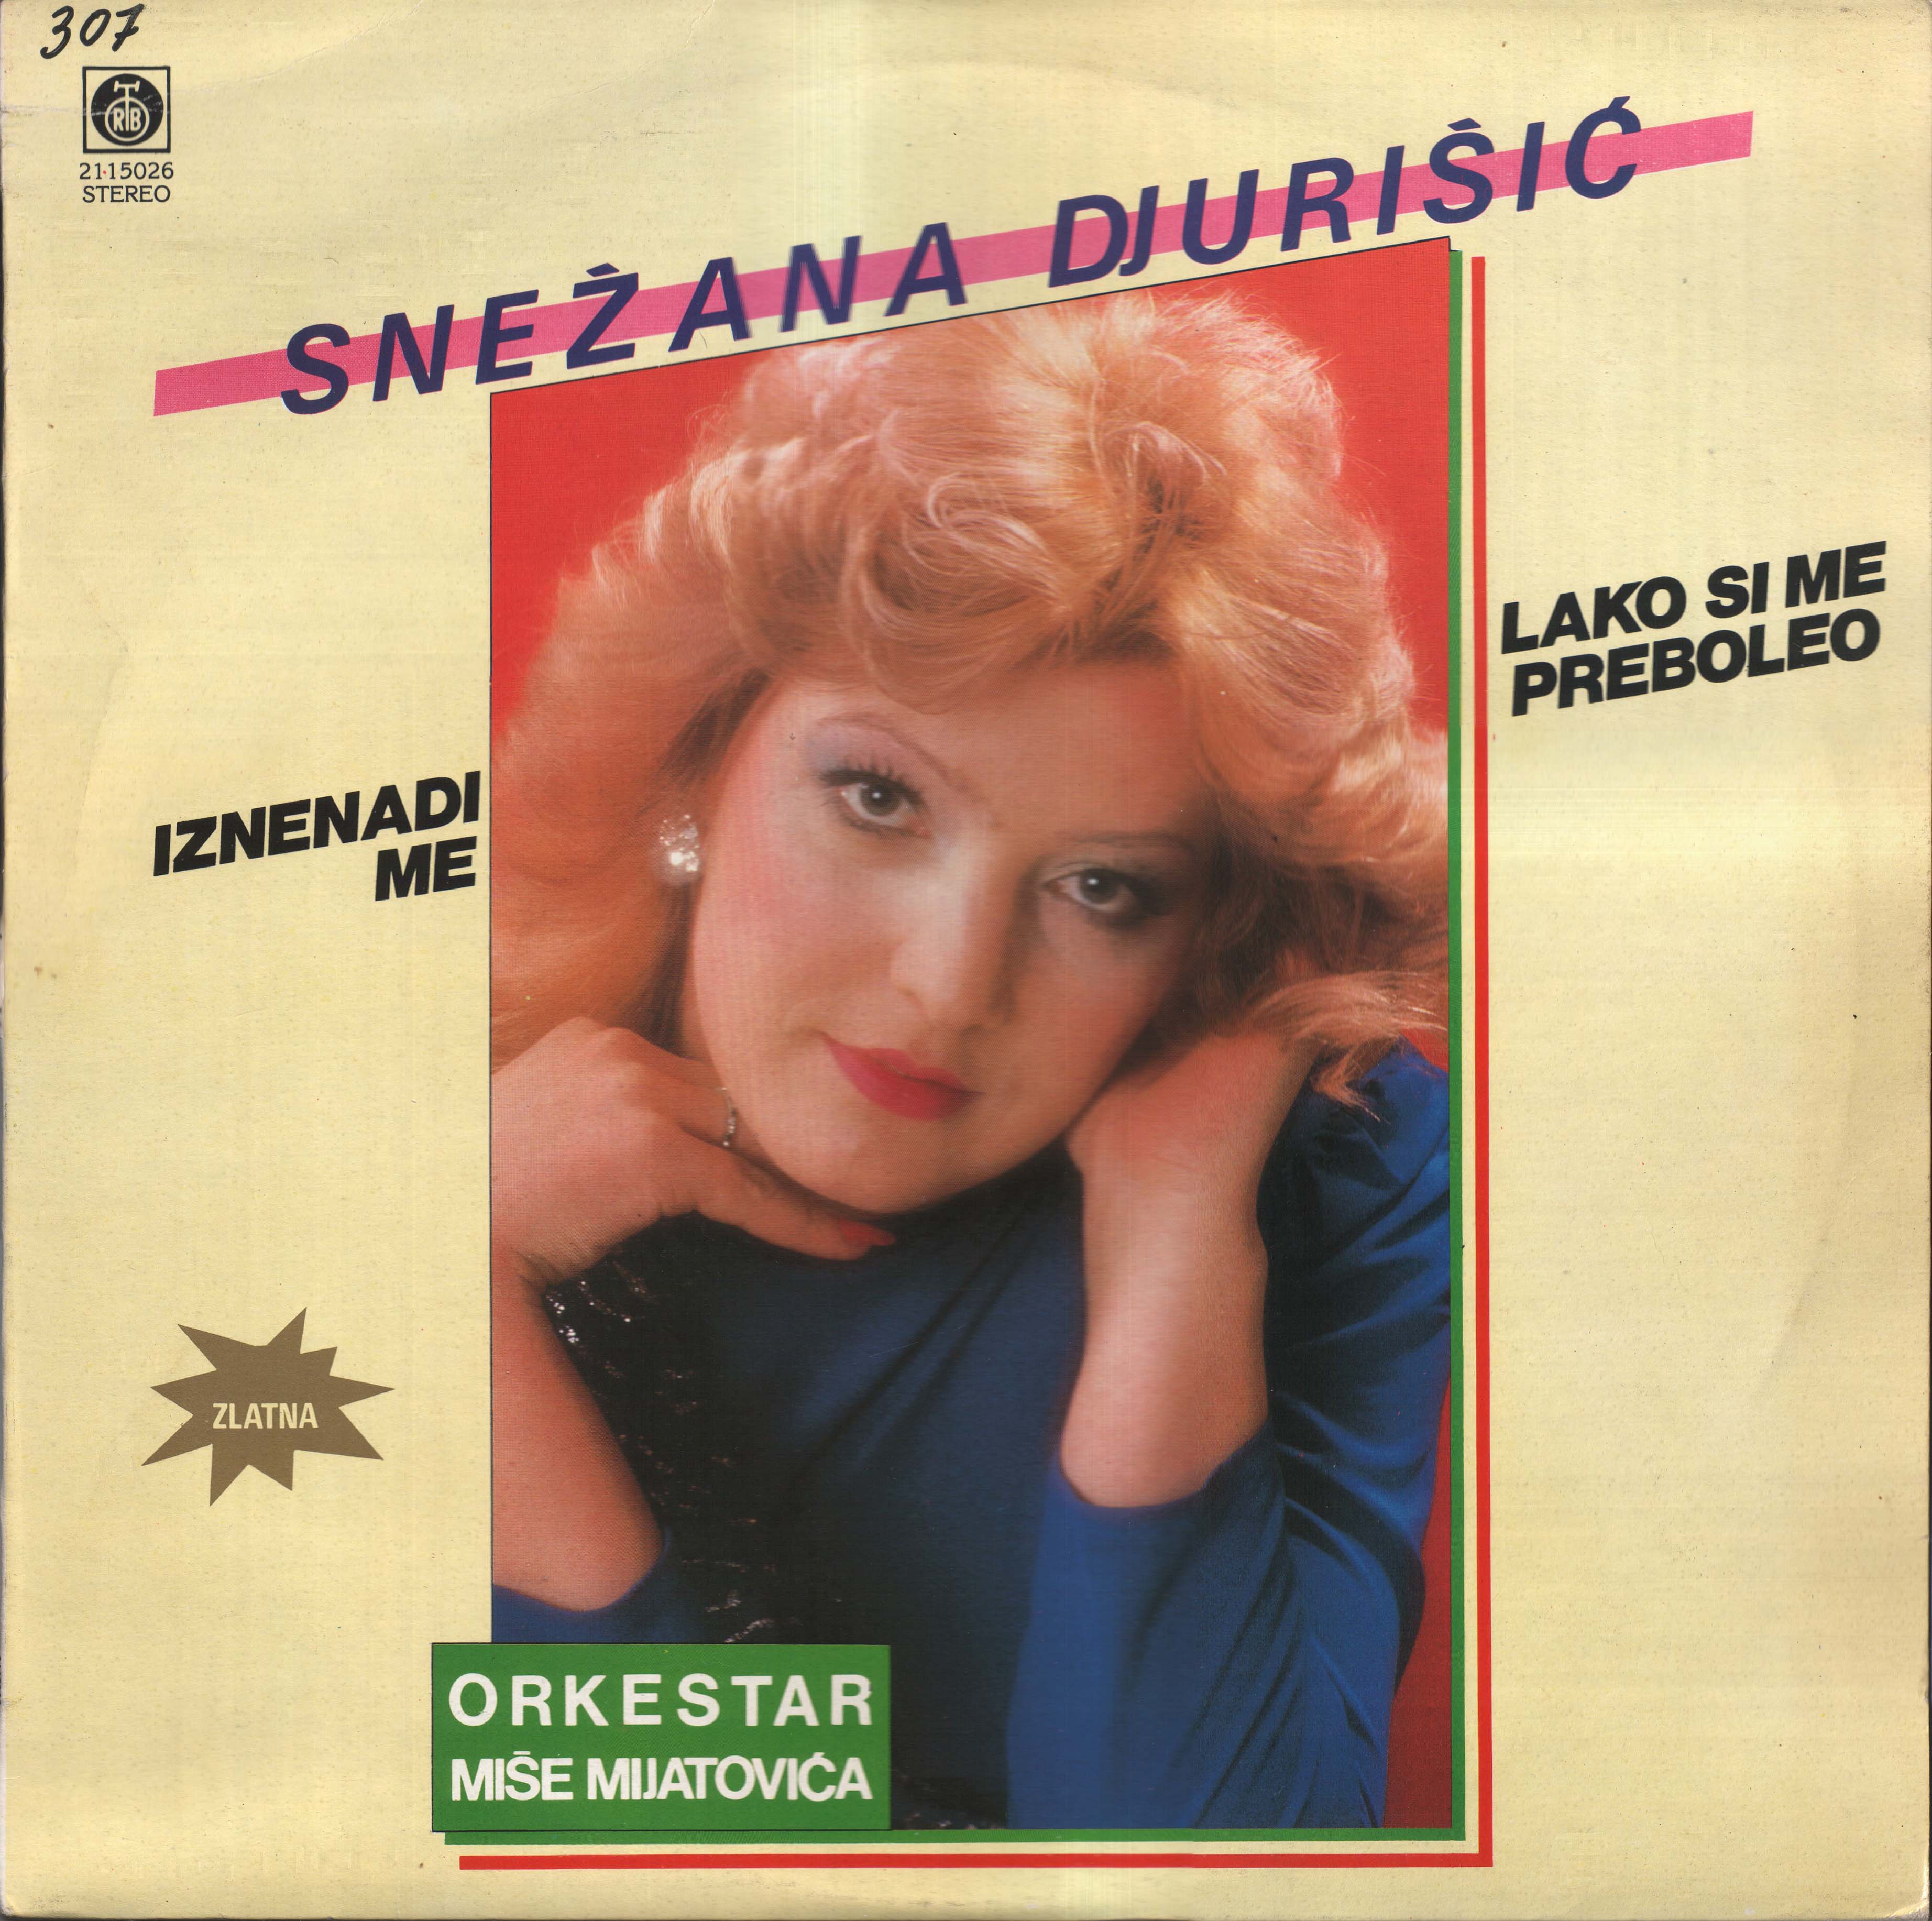 Snezana Djurisic 1986 P